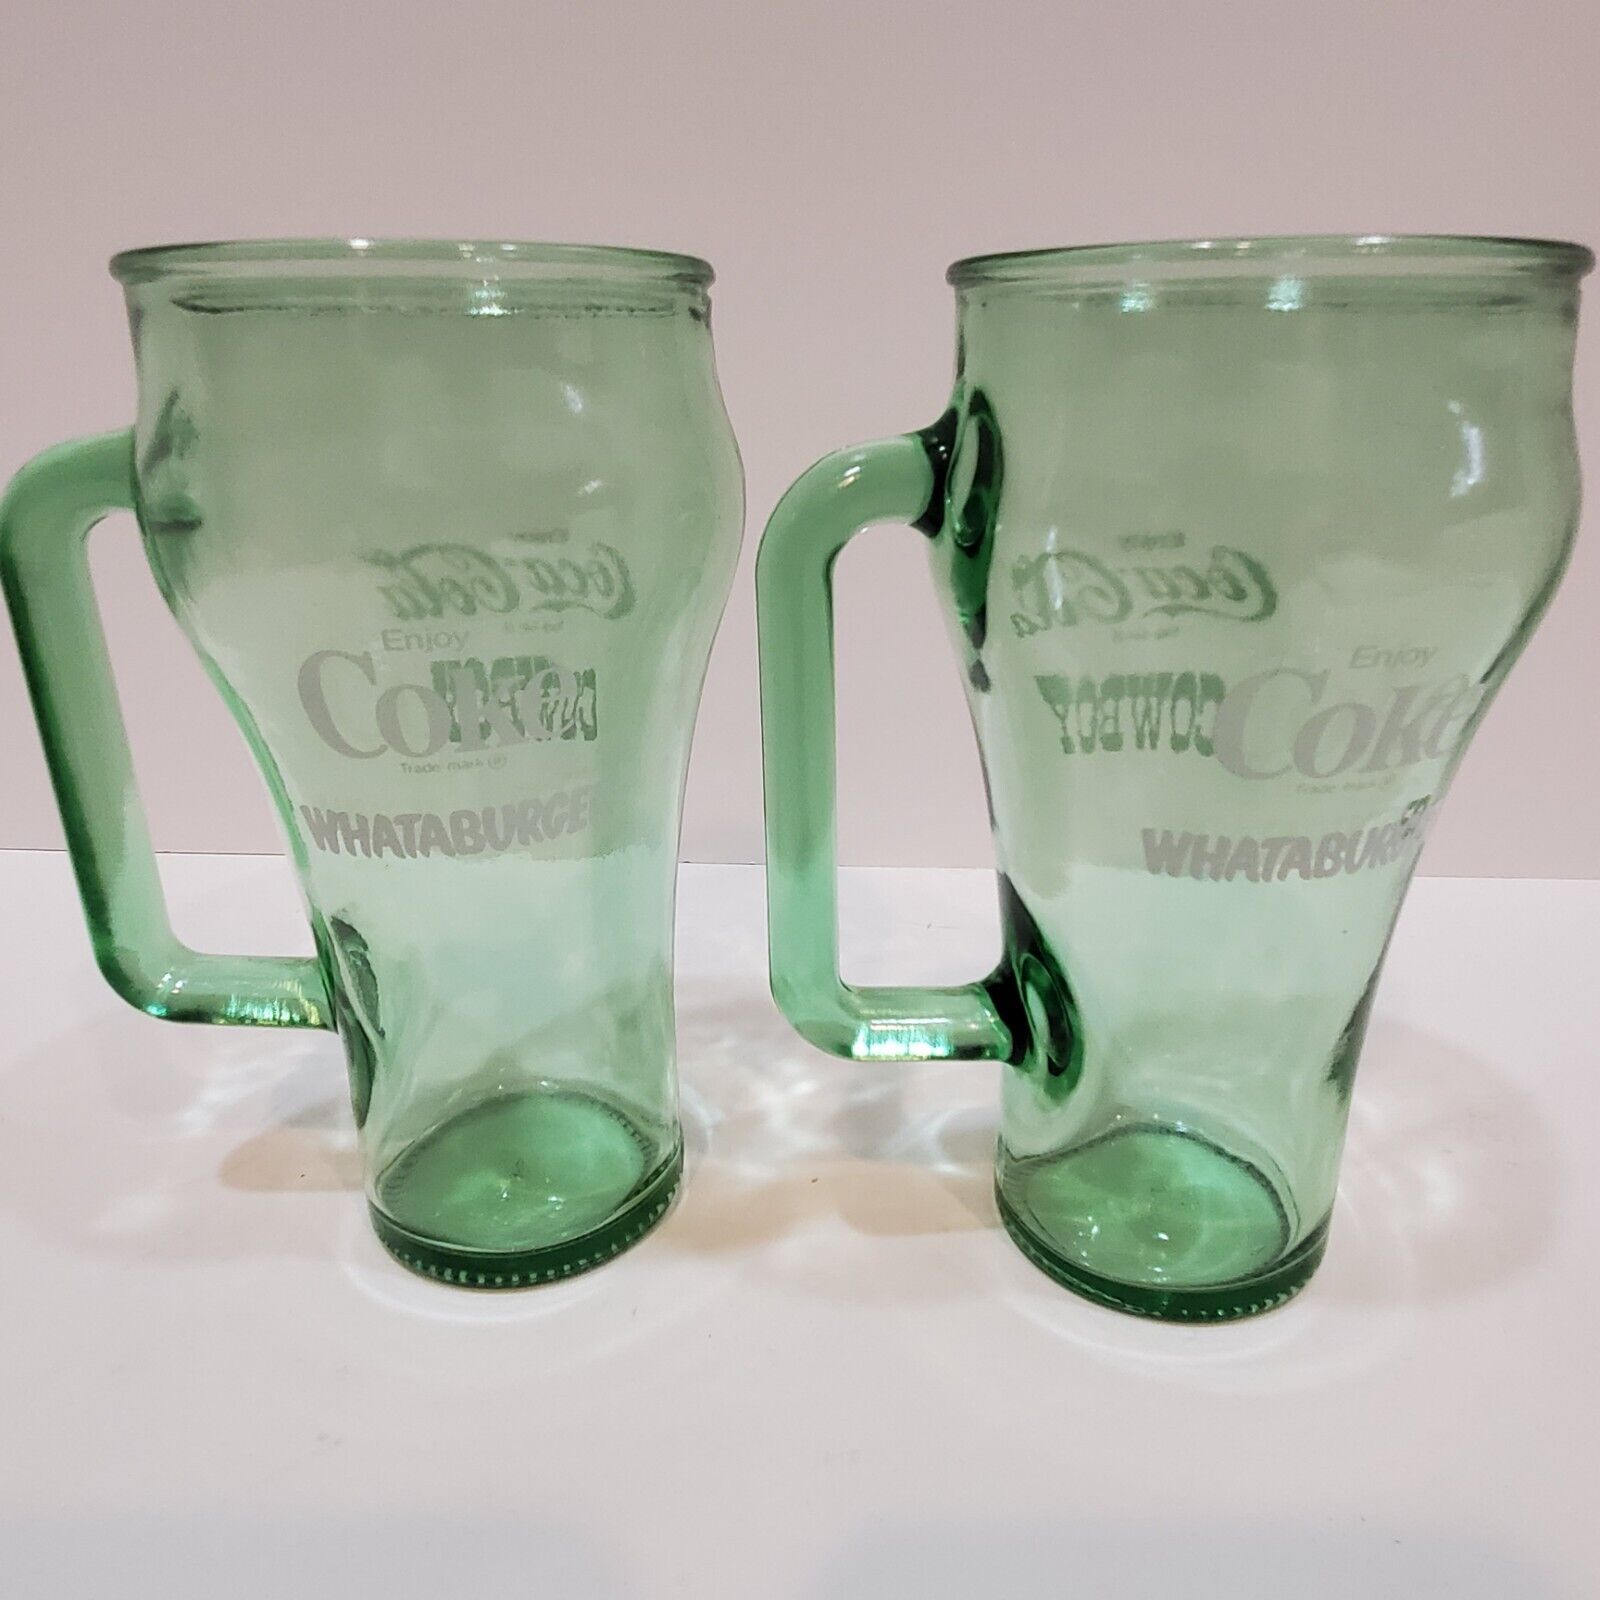 Vintage Set of 2 Coca-Cola Whataburger Cowboy Handle Mugs 12 oz Green Glass 80's